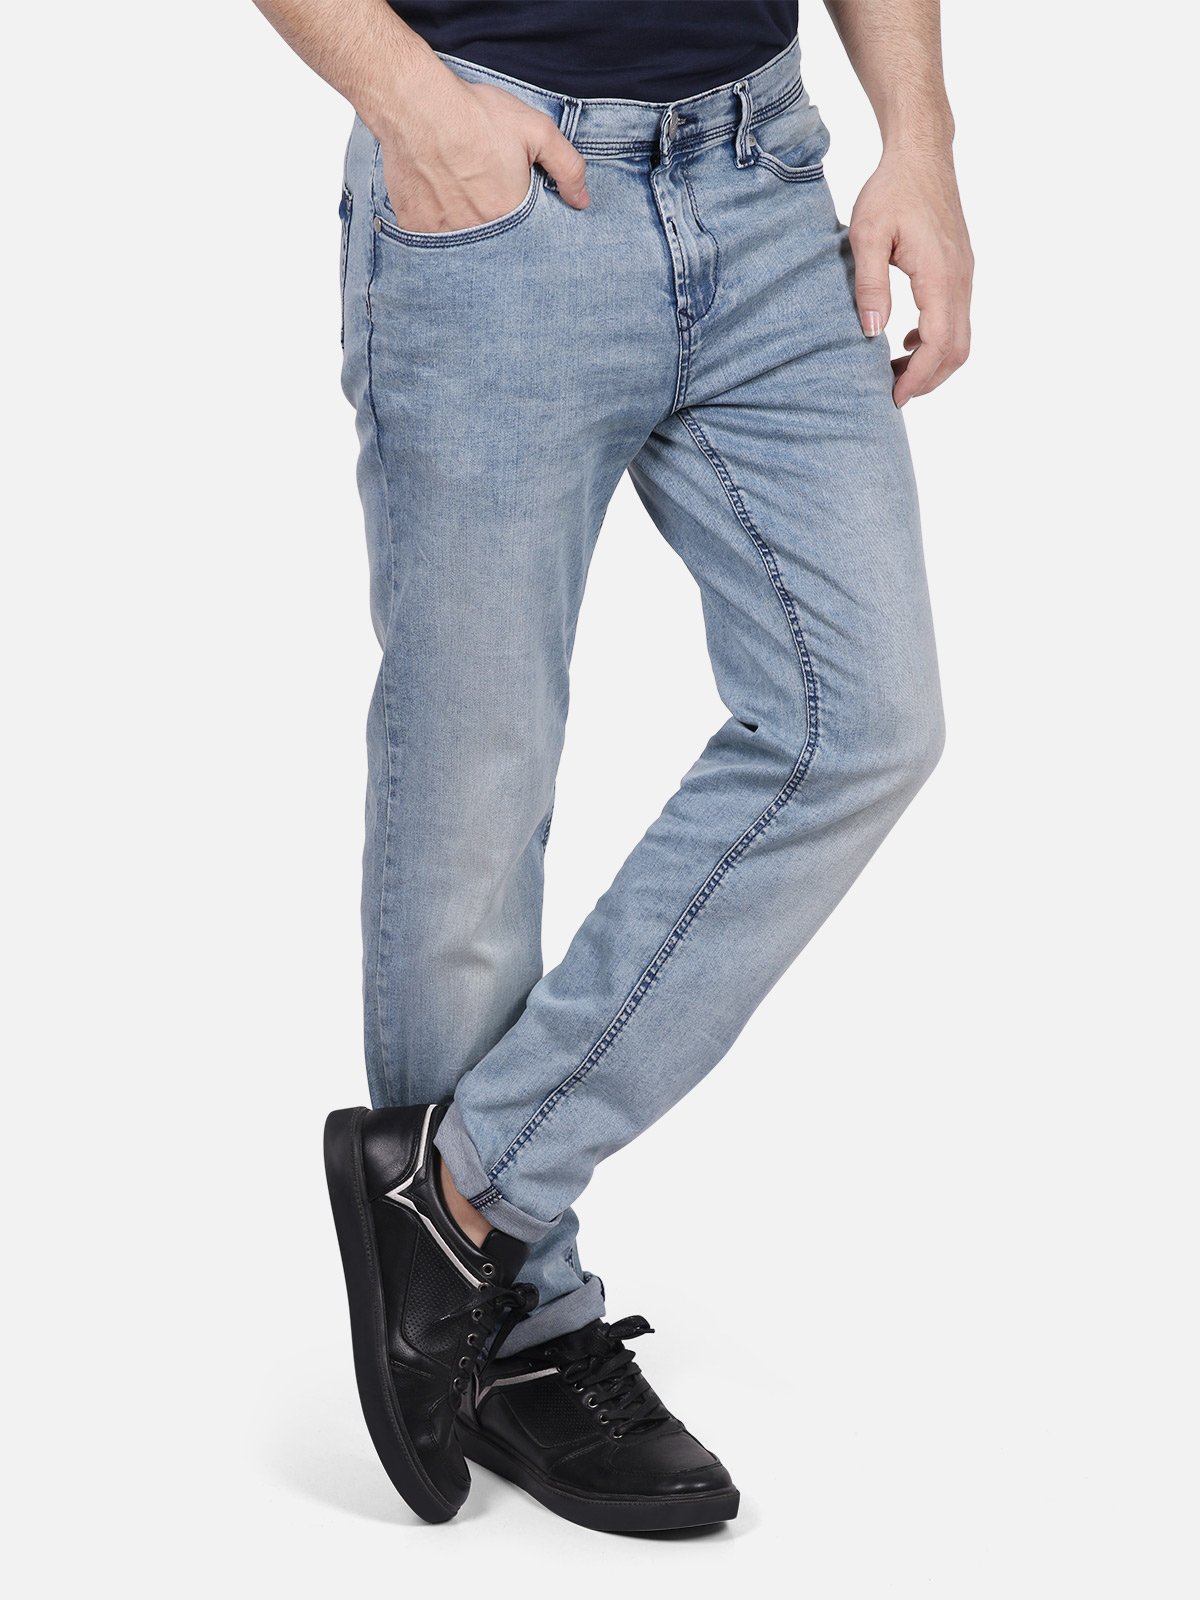 Men's Light Blue Denim Jeans - FMBP18-027